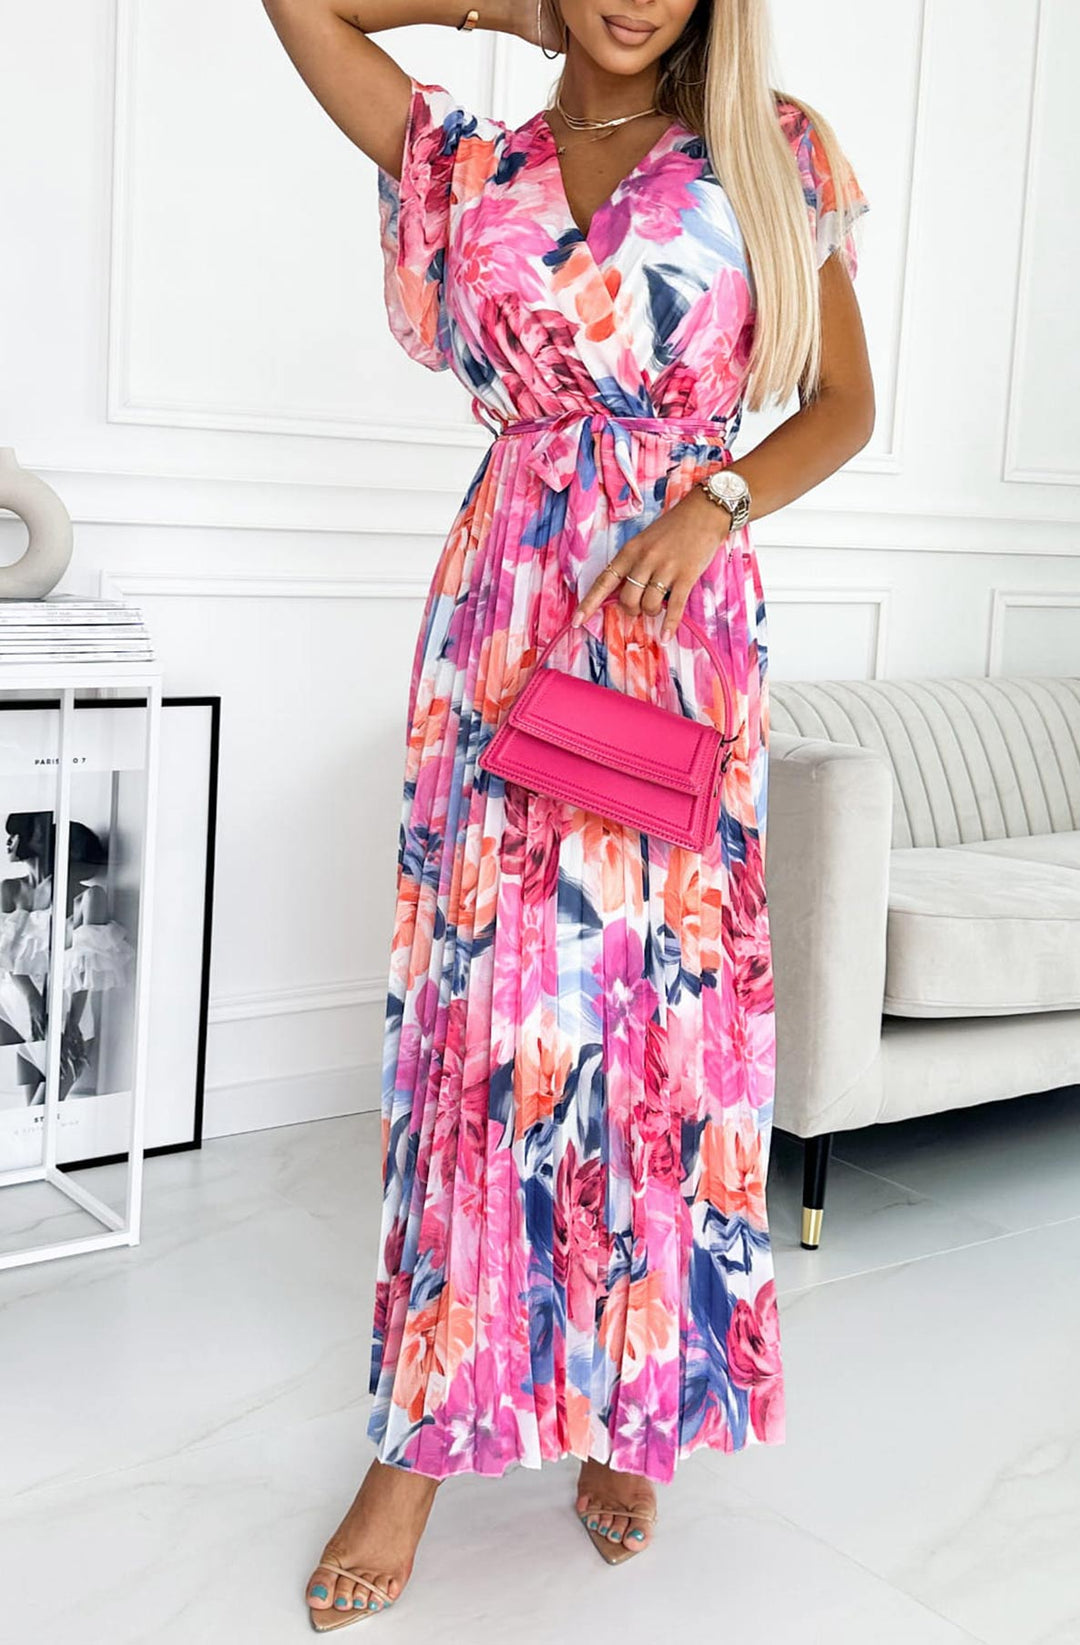 Amalfi Coast Pale Pink Floral Chiffon Short Sleeve Pleated Belted Maxi Dress (M-XXL PRE-ORDER)